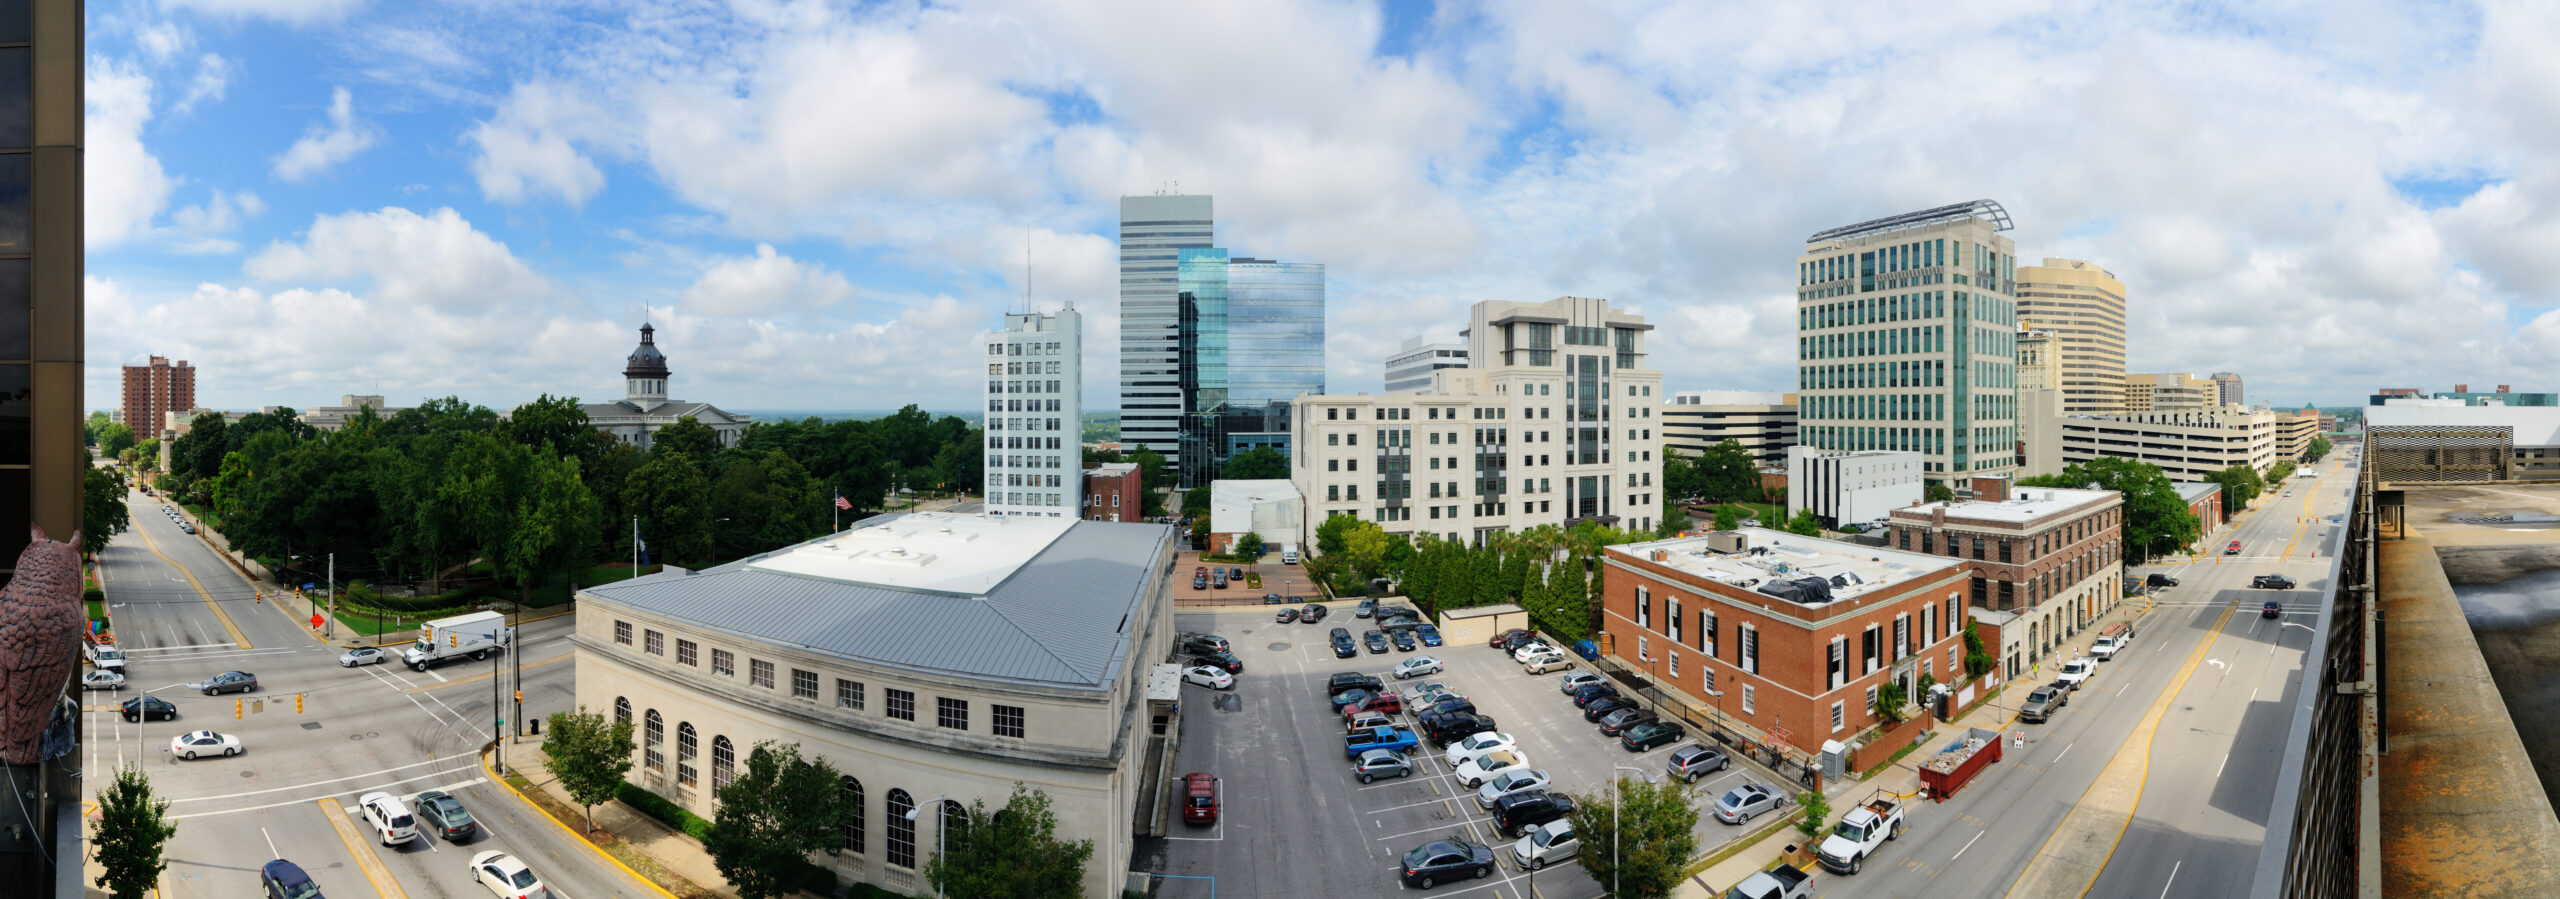 Panoramic skyline of downtown Columbia, South Carolina, USA.